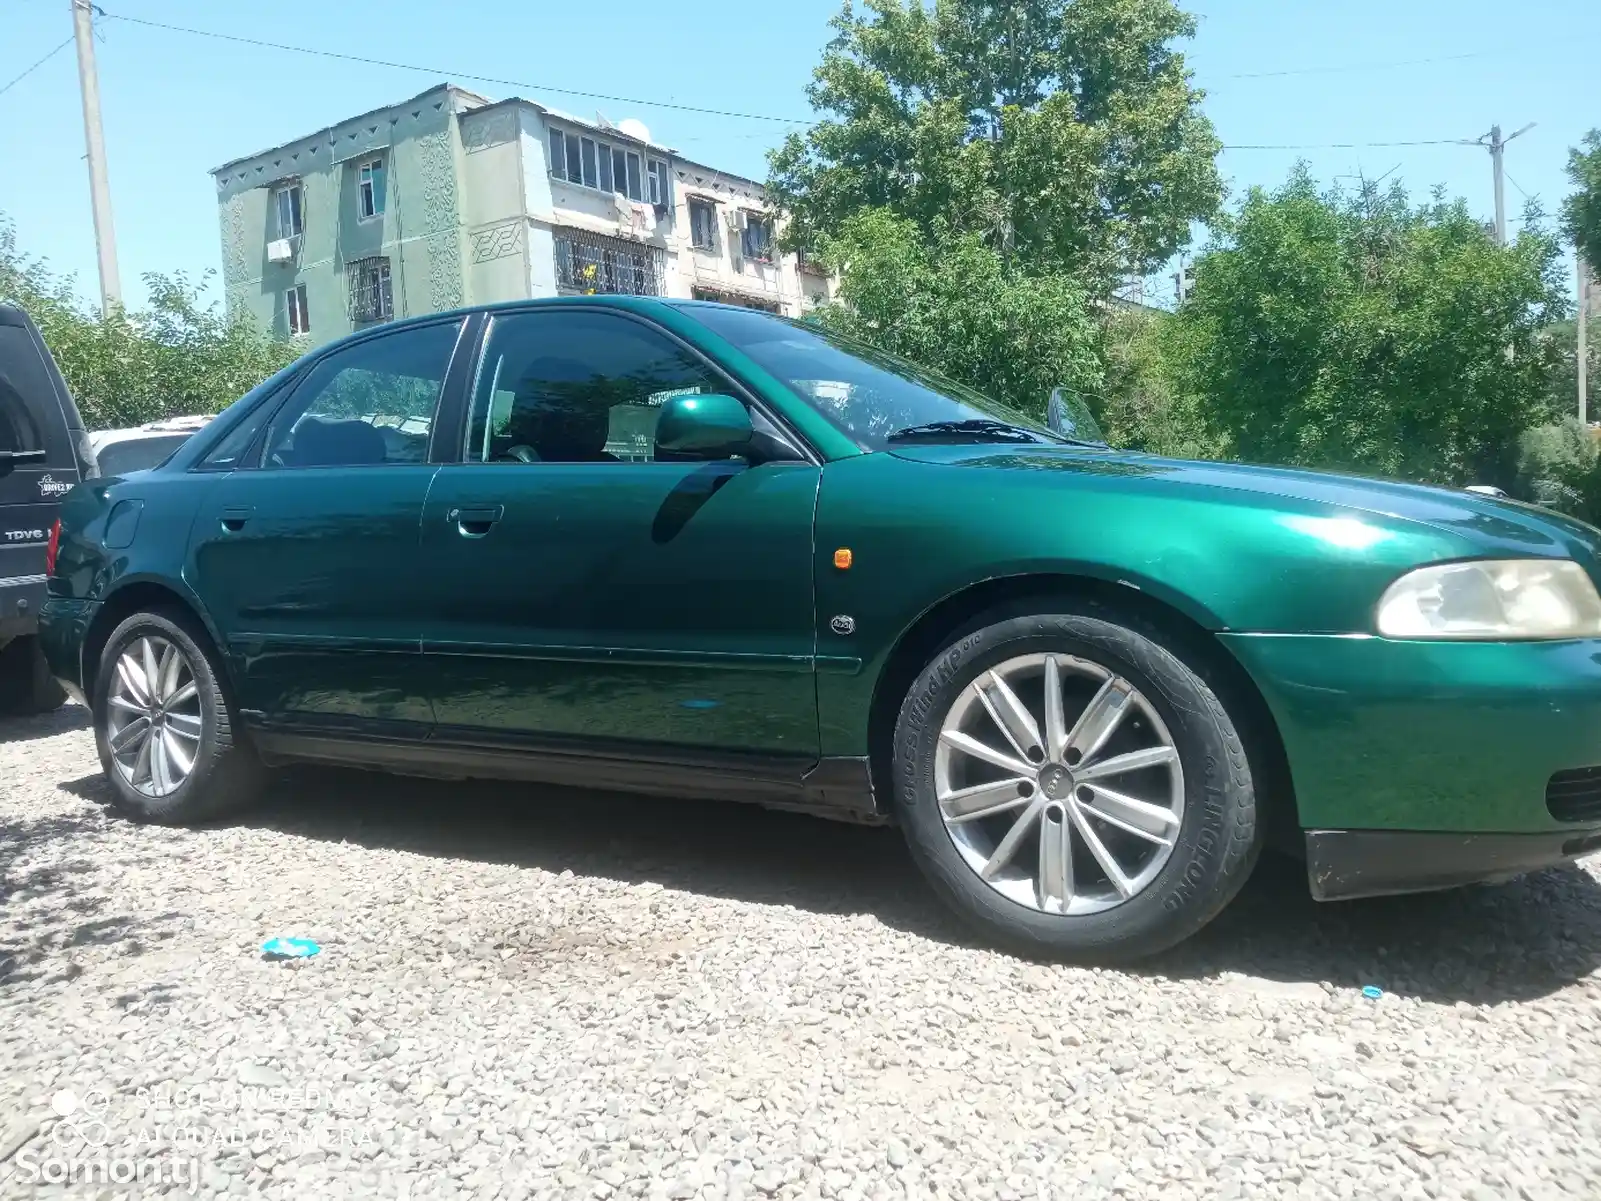 Audi A4, 1997-2